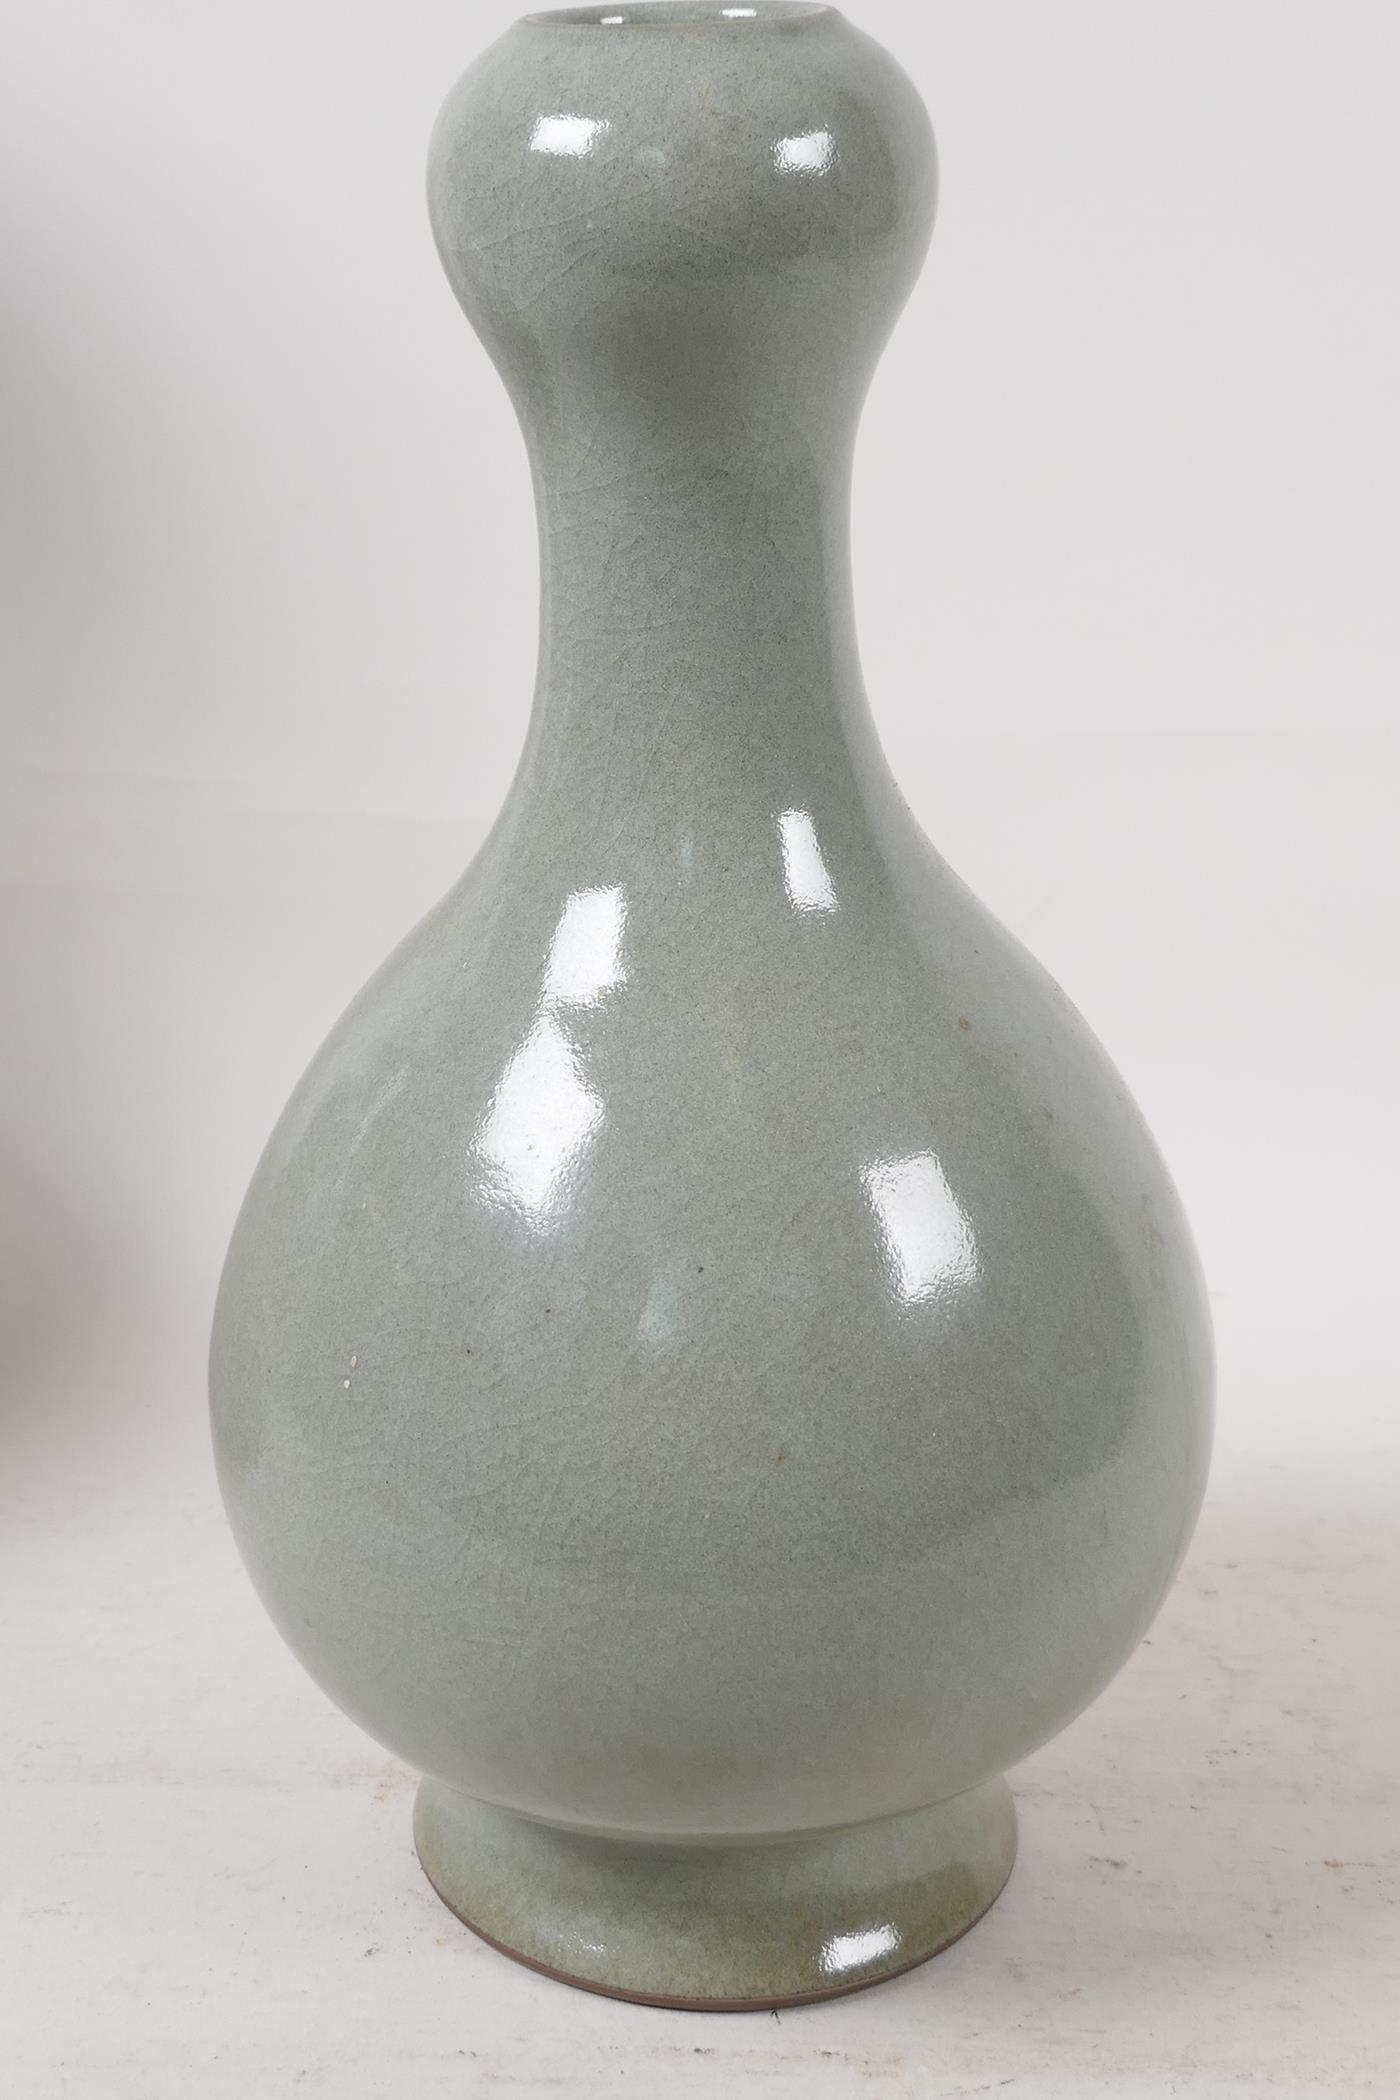 A Chinese Ru ware style celadon crackle glazed garlic head vase, 11" high - Image 2 of 3